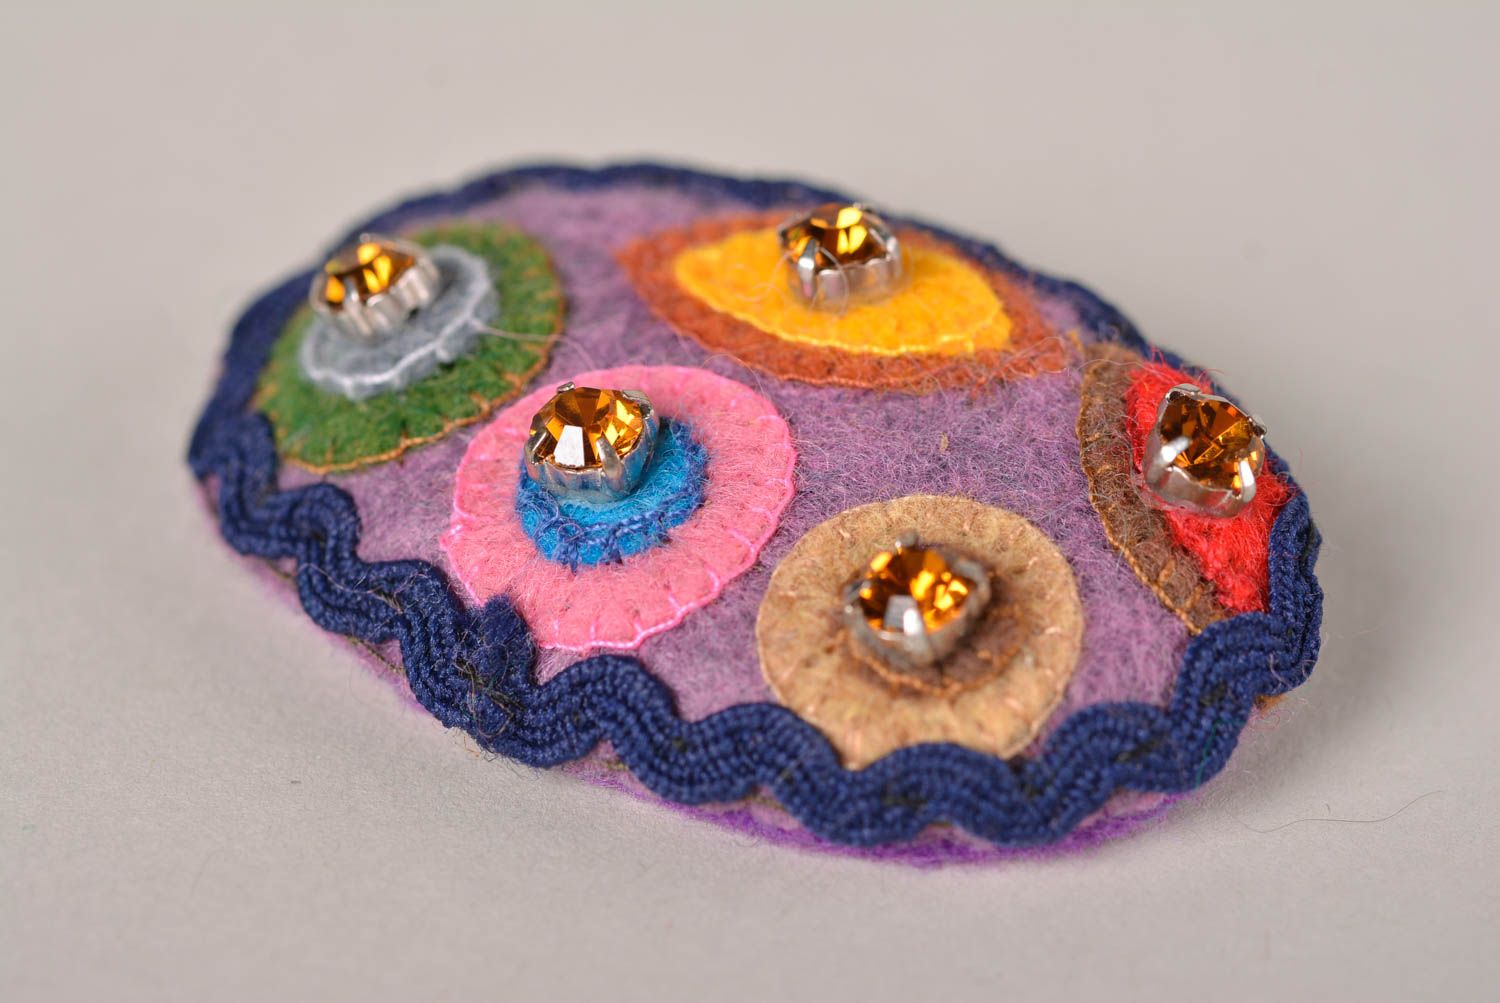 Beautiful handmade felt brooch jewelry costume jewelry designs gifts for her photo 5